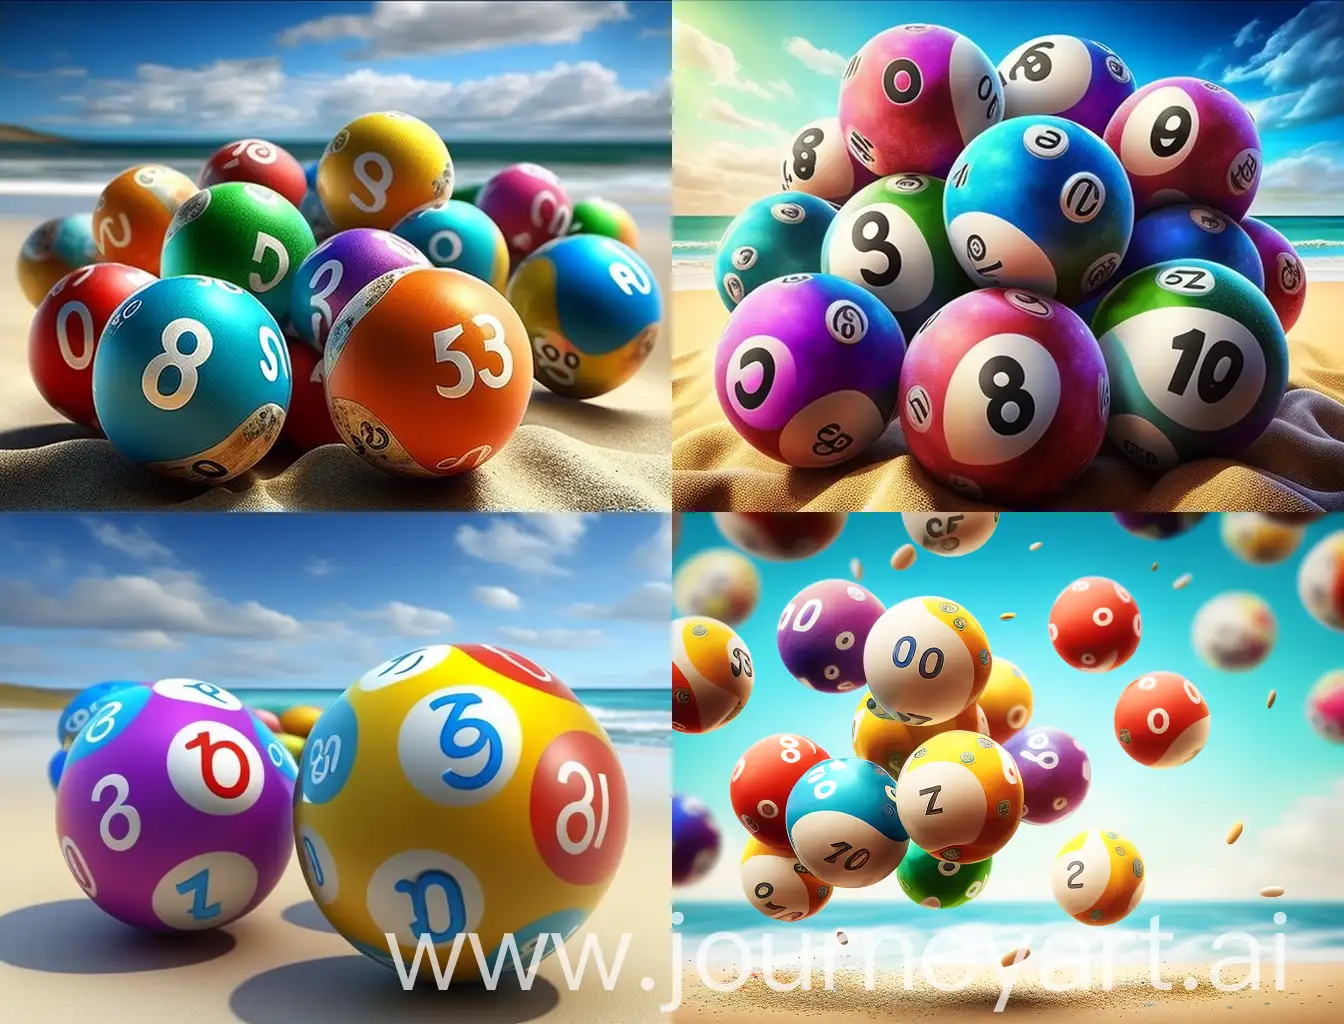 Bingo balls flying, beach background cartoonist images